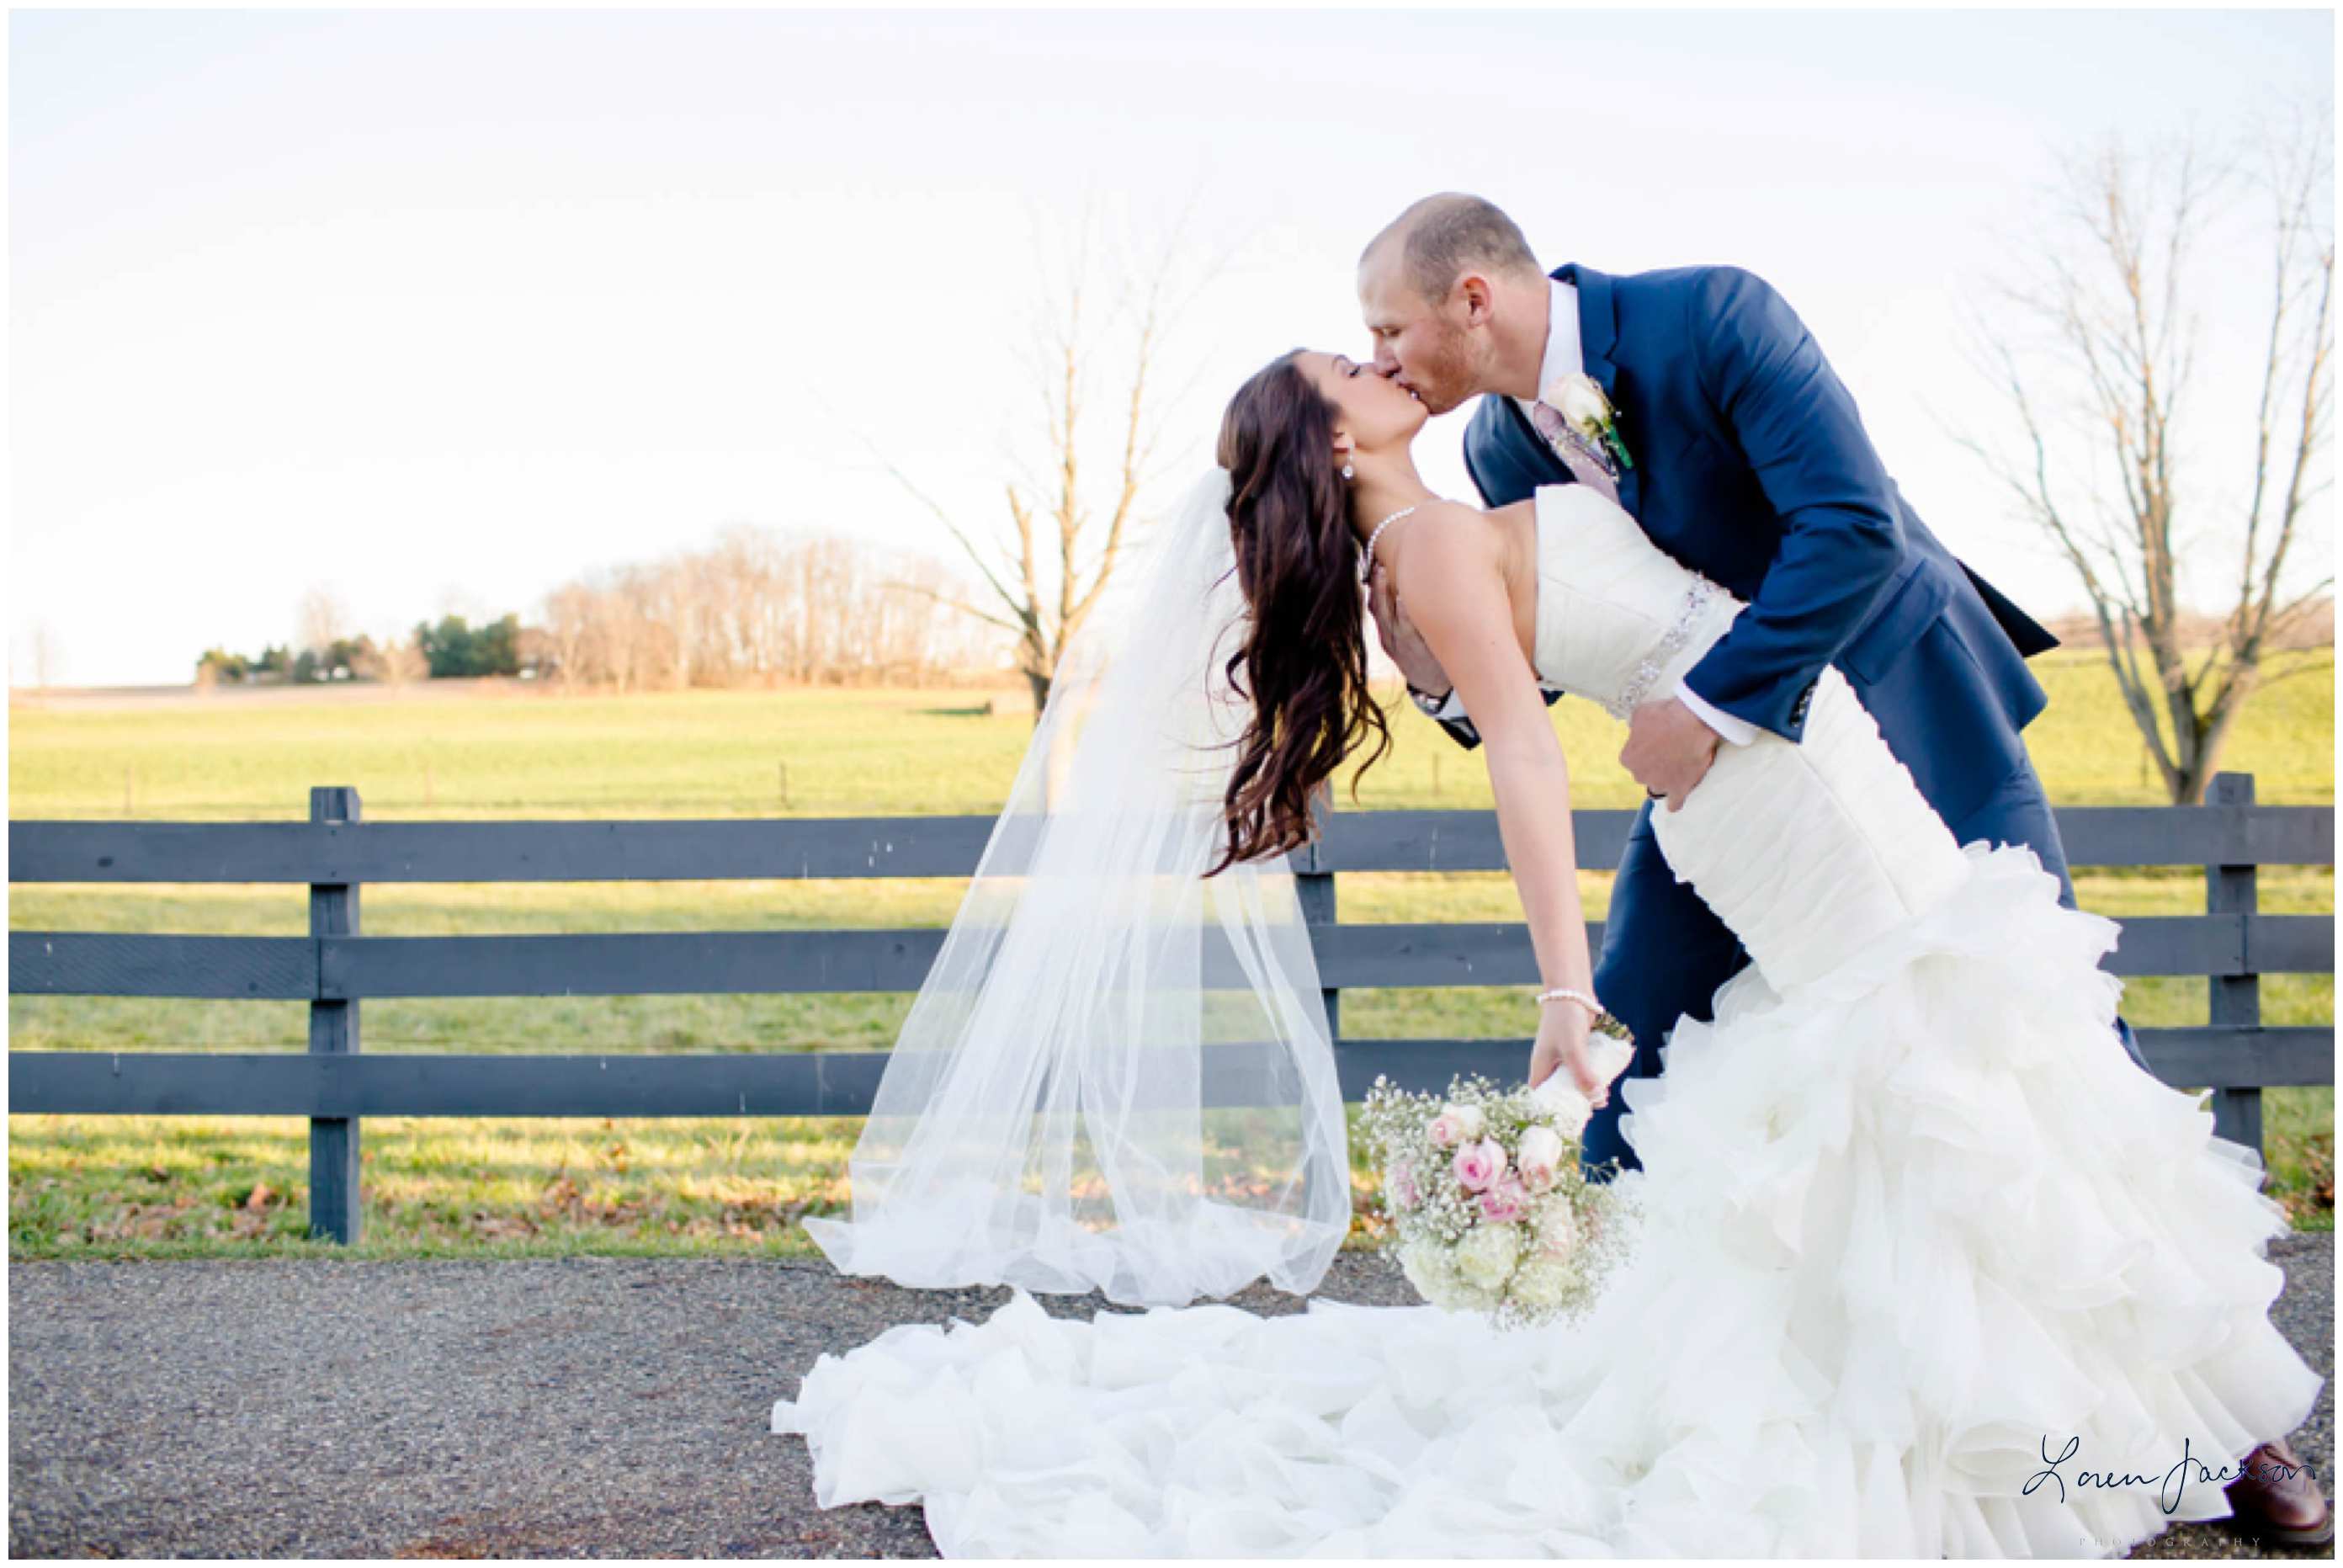 Loren-Jackson-Photography-brookside-farm-fall-wedding-76.jpg